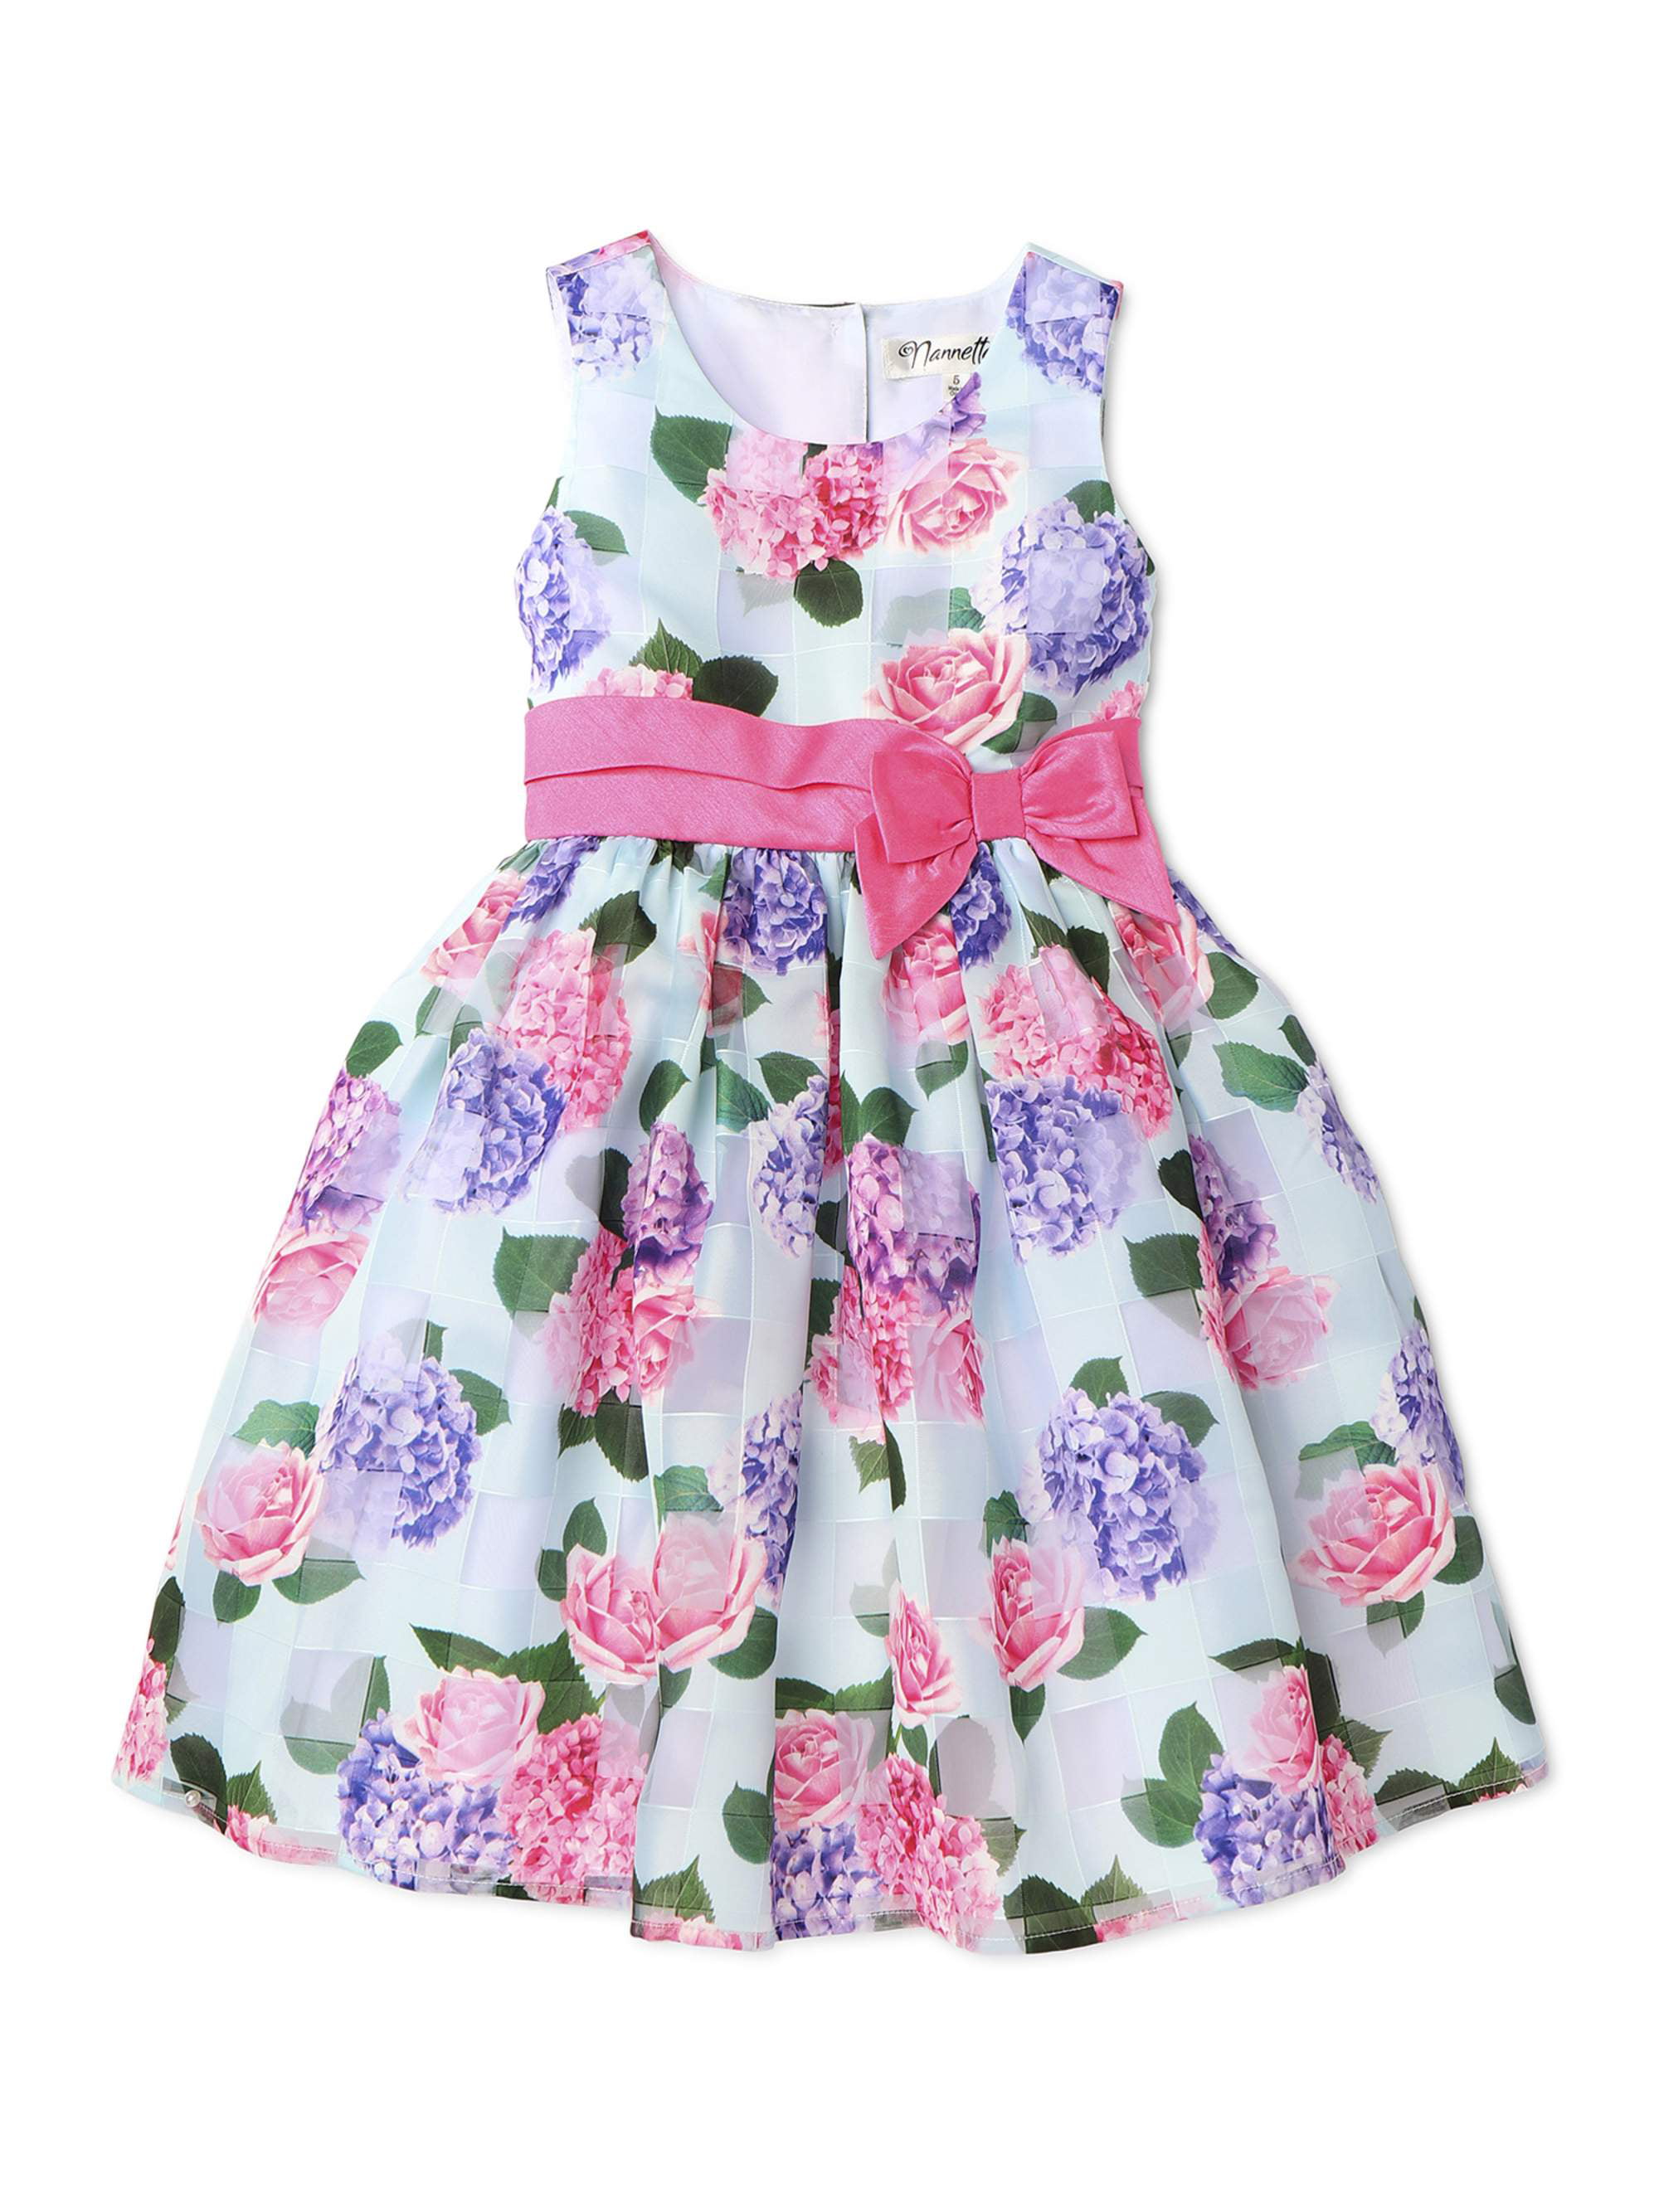 Nanette Girls Printed Jacquard Organza Easter Dress, Sizes 4-6X ...